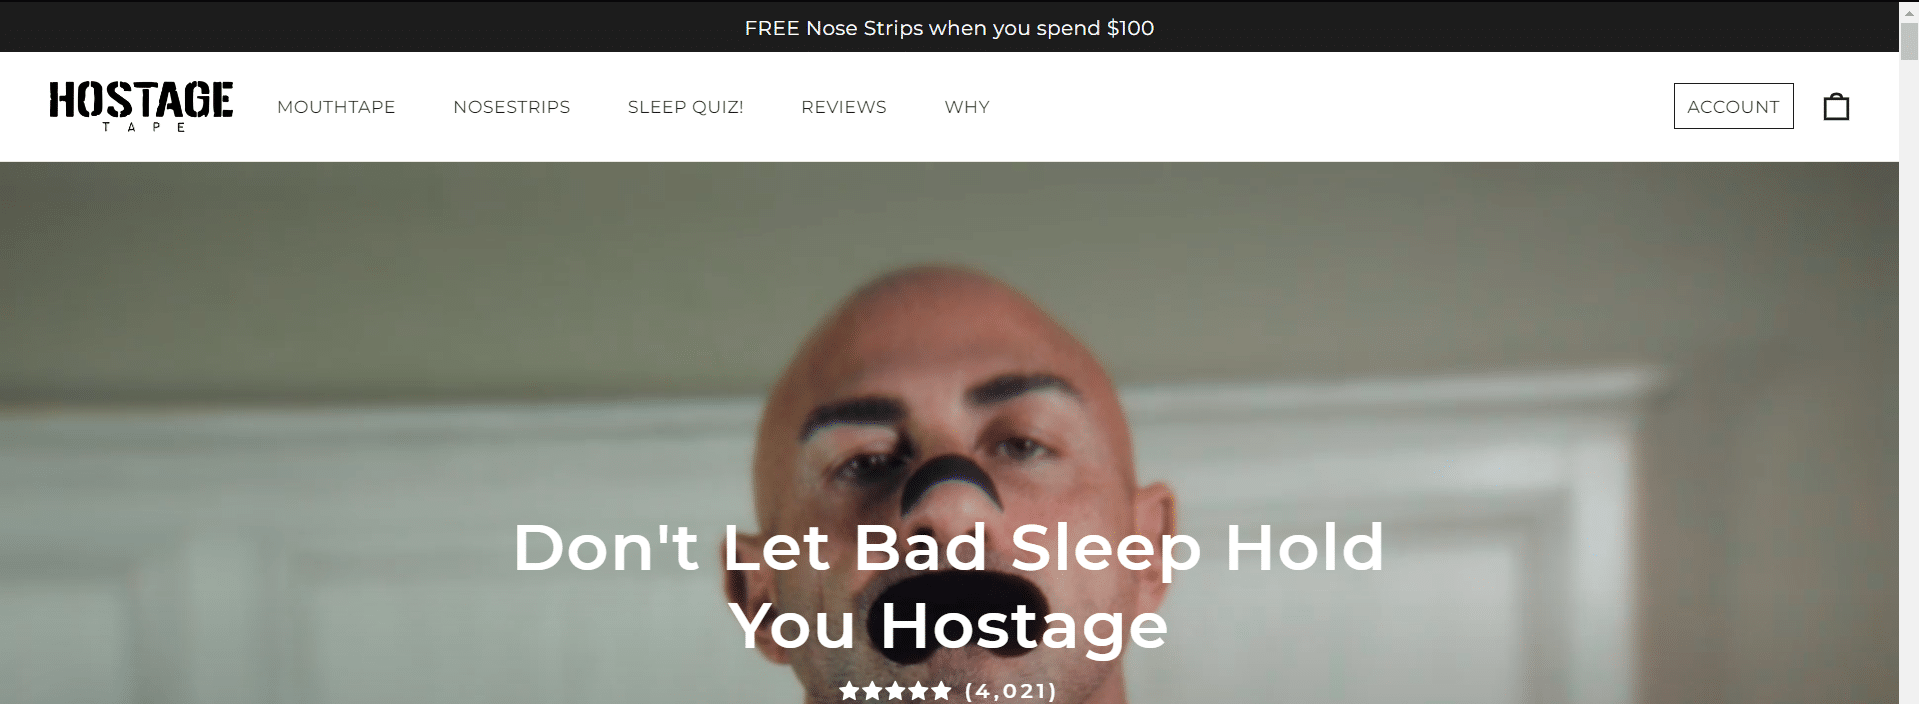 hostagetape website